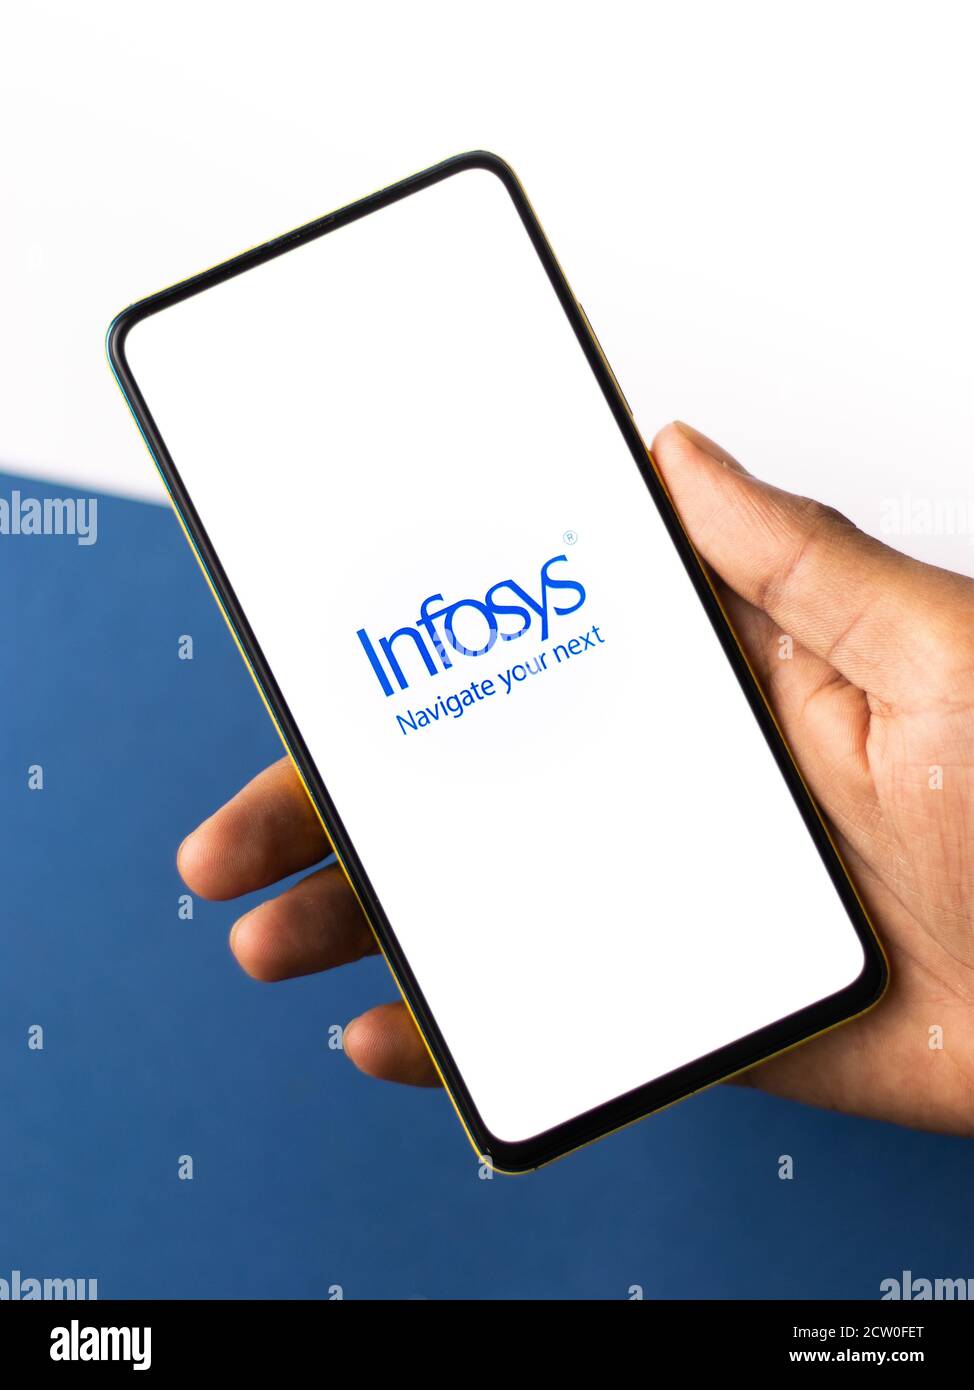 Assam, indien - September 24, 2020 : Infosys Logo auf Handy-Bildschirm Stock Bild. Stockfoto